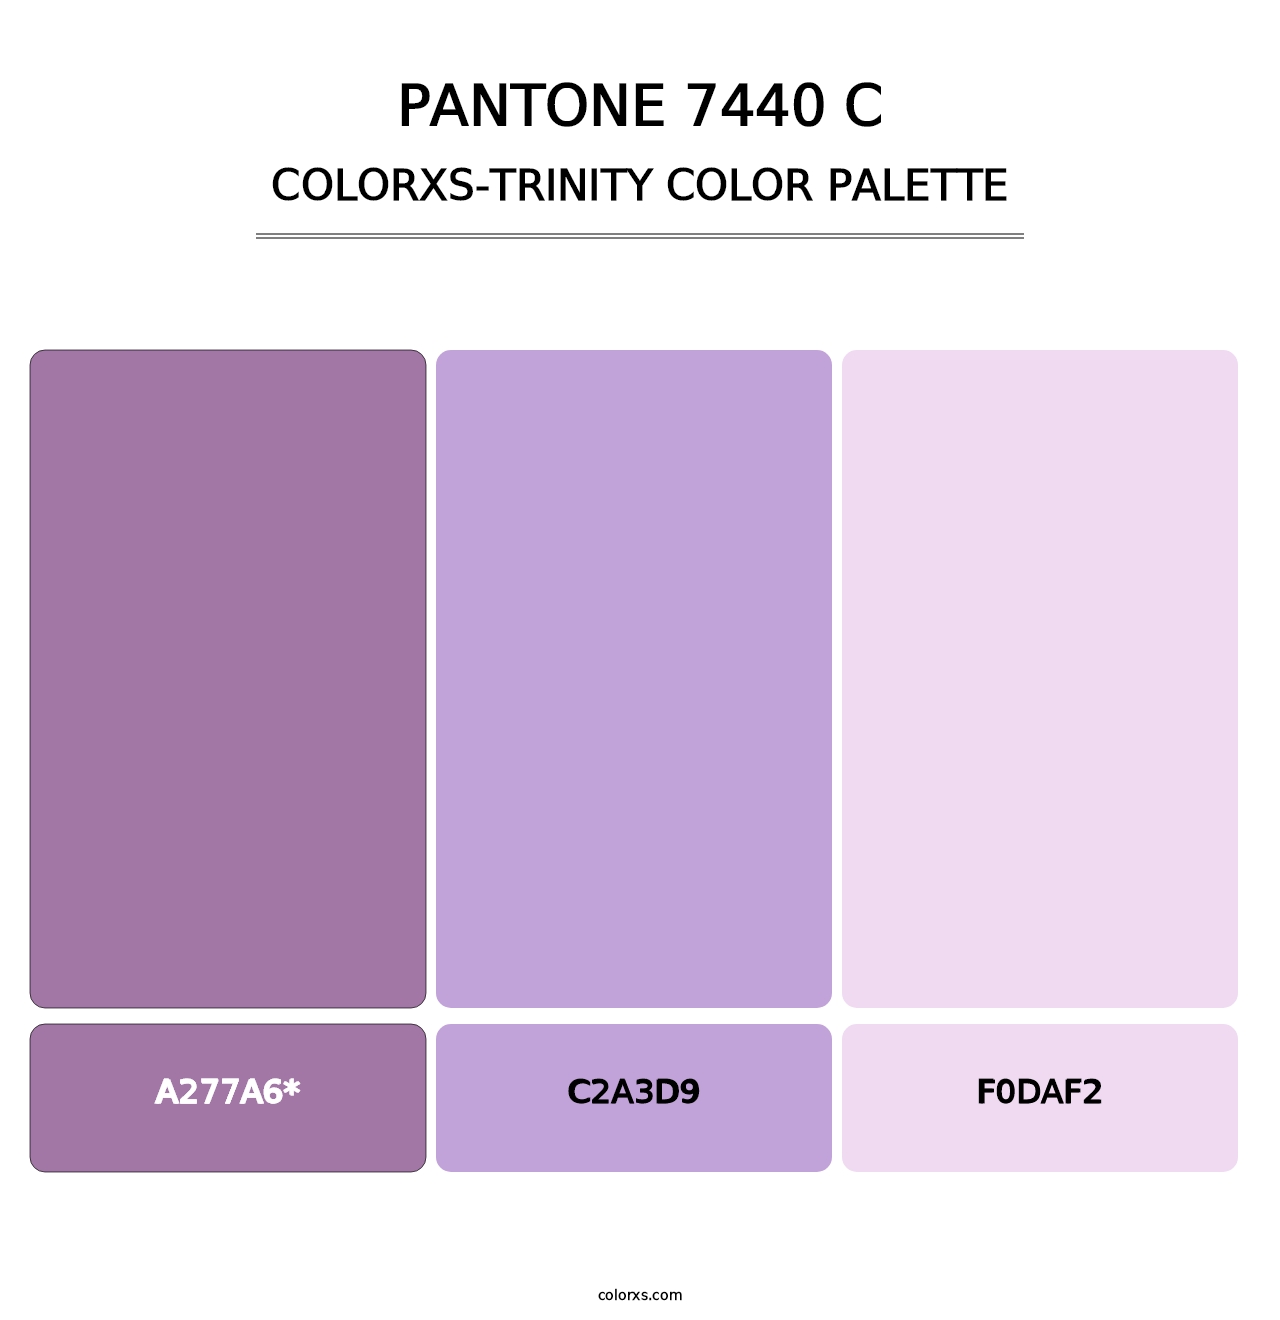 PANTONE 7440 C - Colorxs Trinity Palette